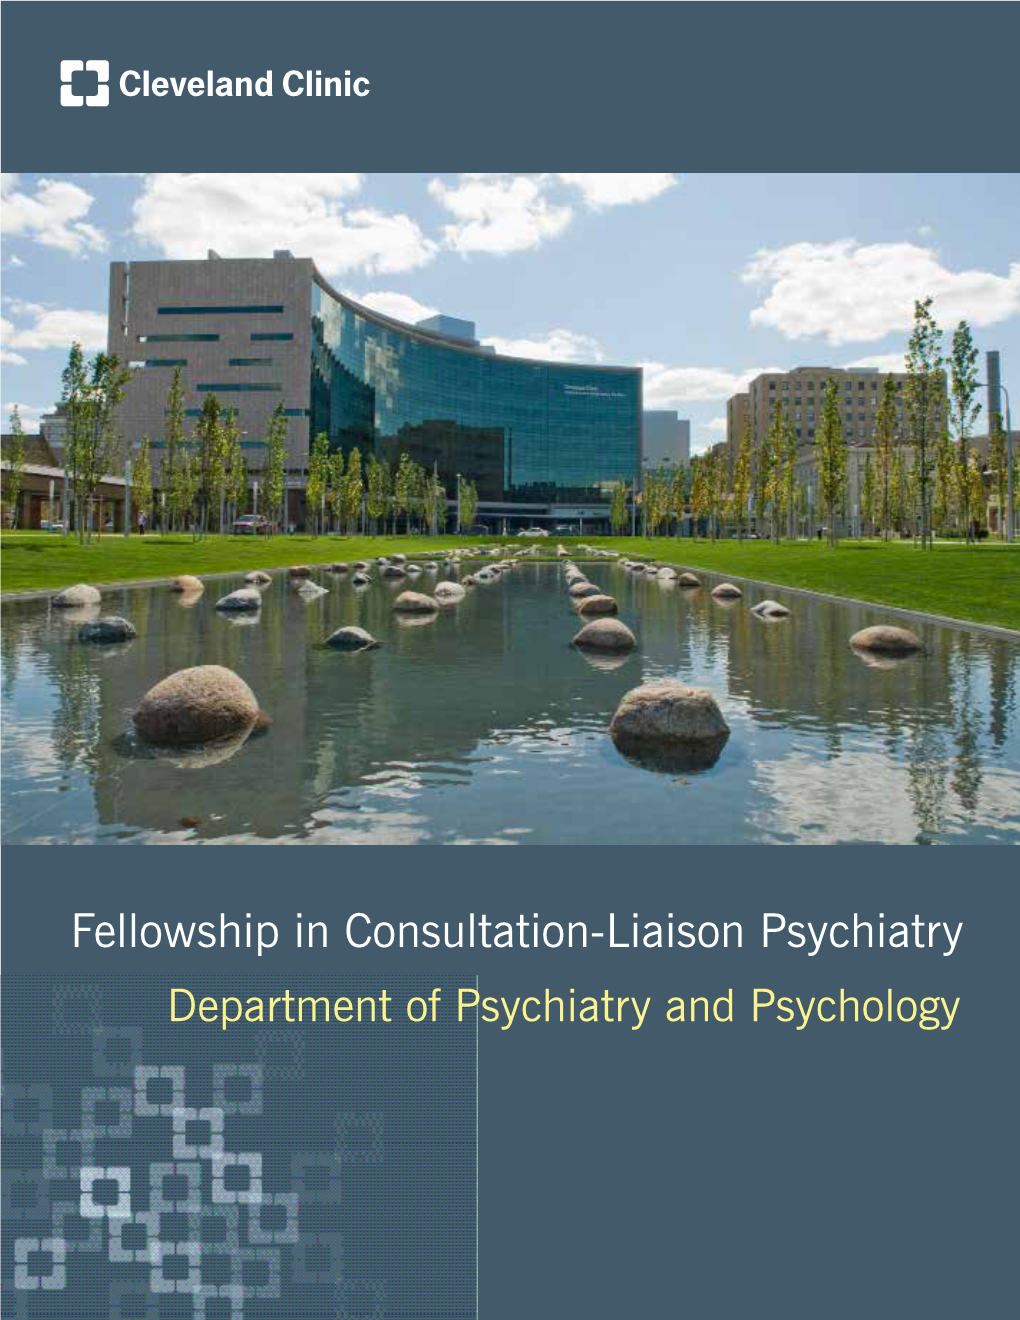 Fellowship in Consultation-Liaison Psychiatry